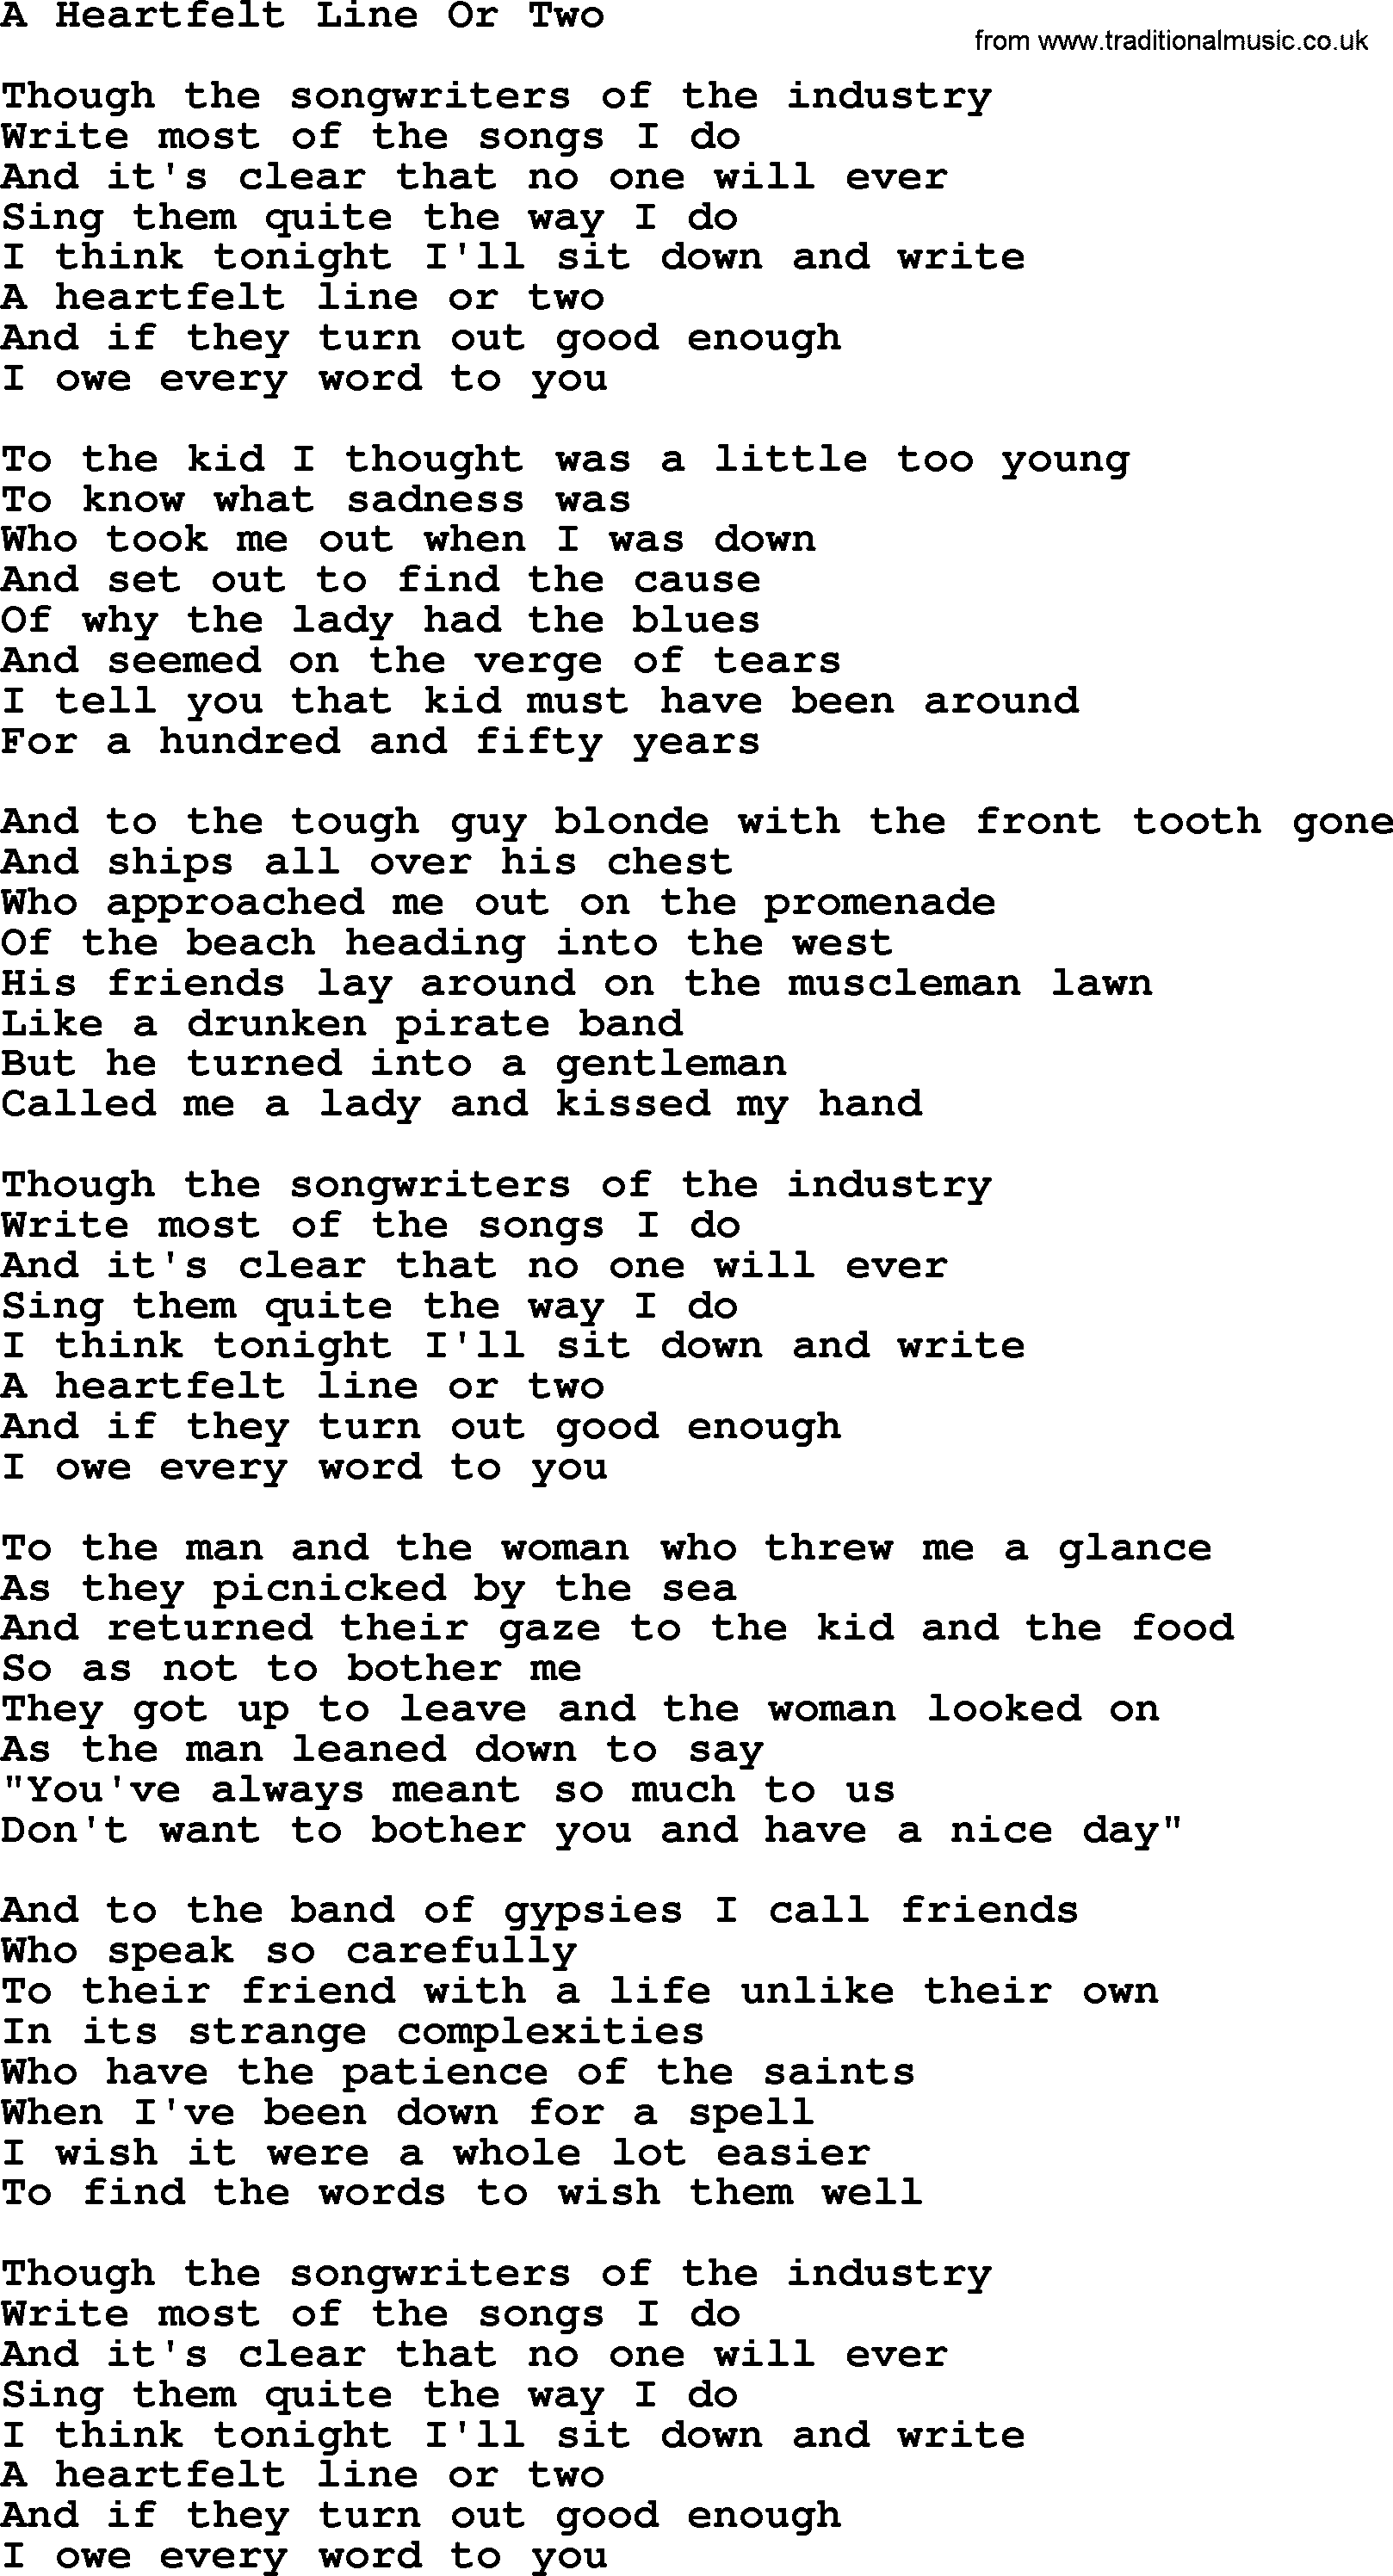 Joan Baez song A Heartfelt Line Or Two, lyrics